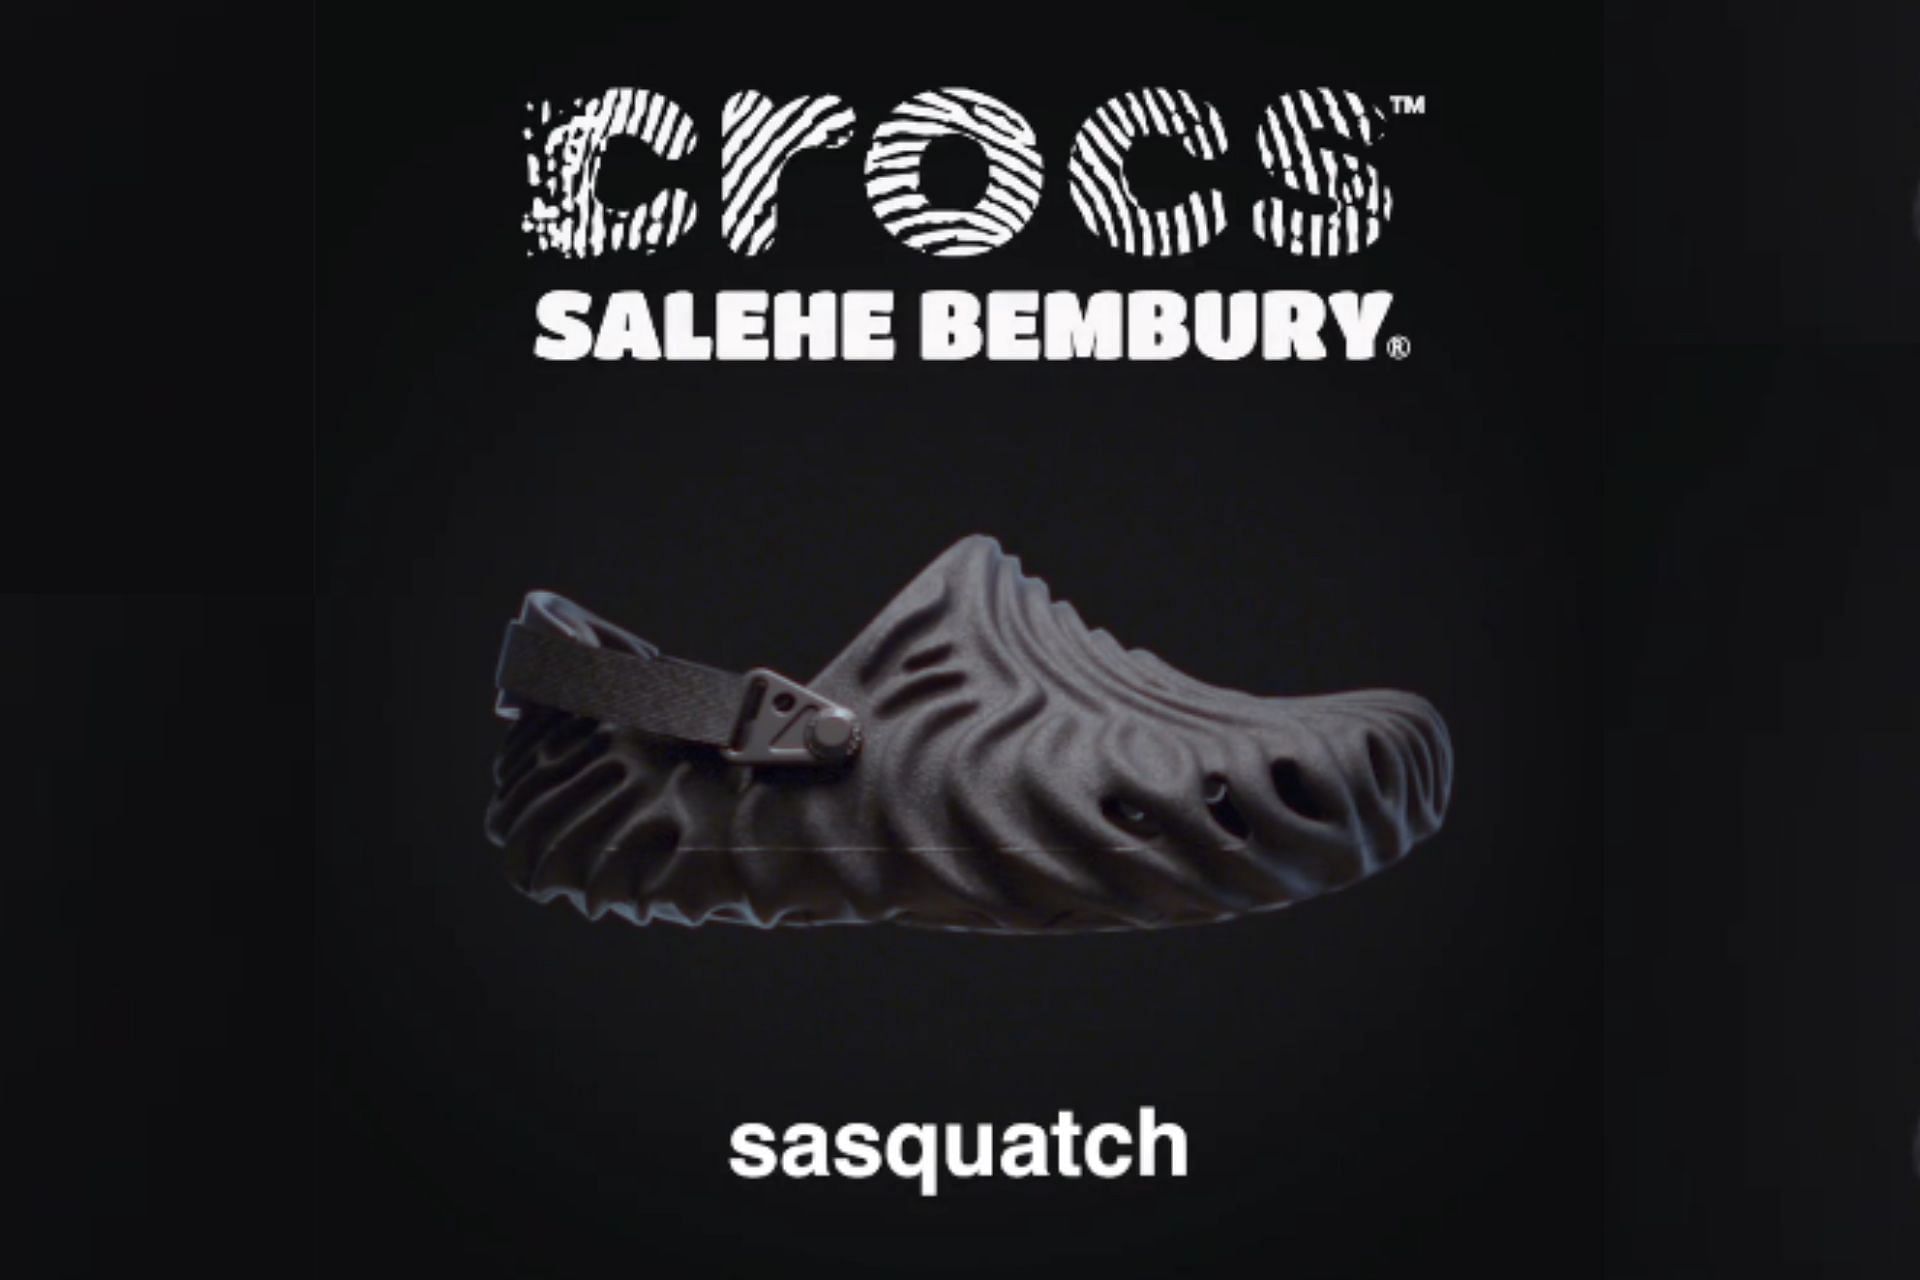 Upcoming Salehe Bembury x Crocs Pollex Clog &quot;Sasquatch,&quot; launching with Salehe Bembury&#039;s iconic fingerprint pattern (Image via @salehebembury / Instagram)